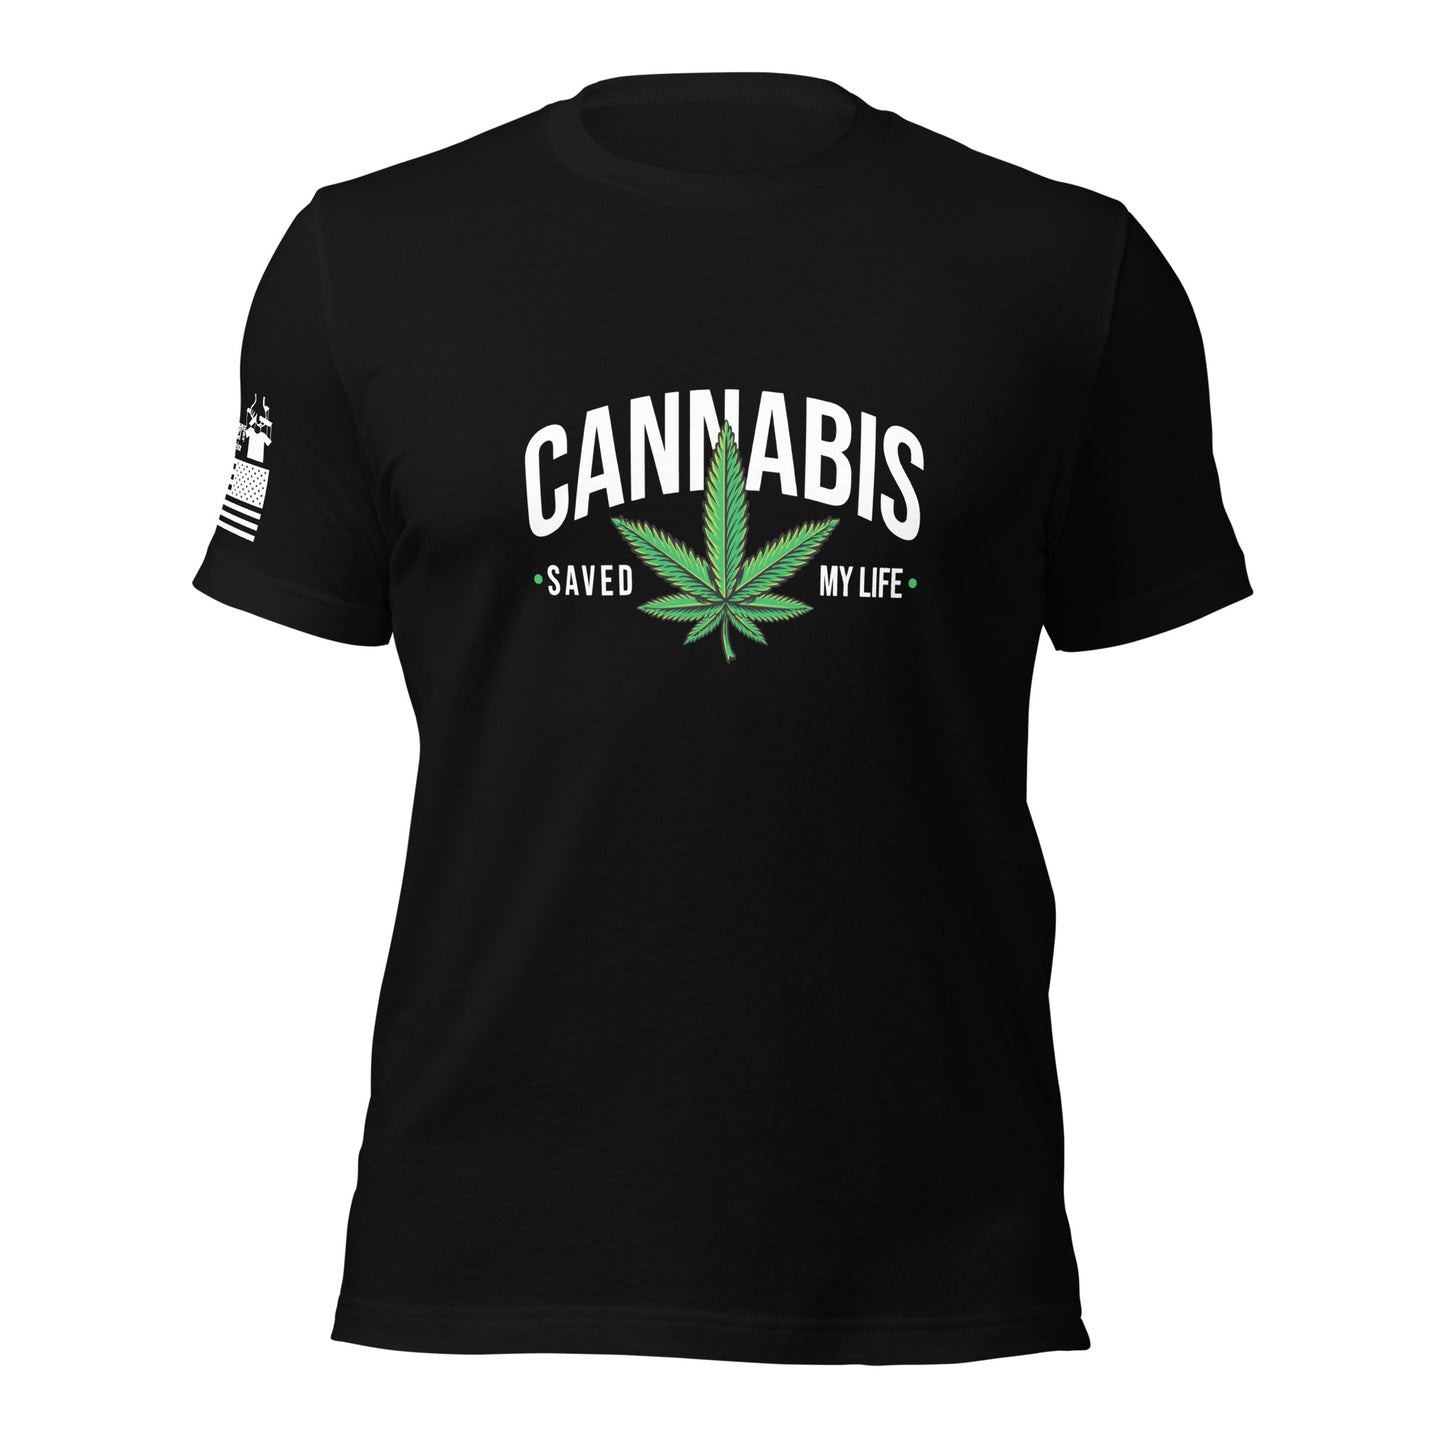 Cannabis - Premium T-Shirt | TheShirtfather